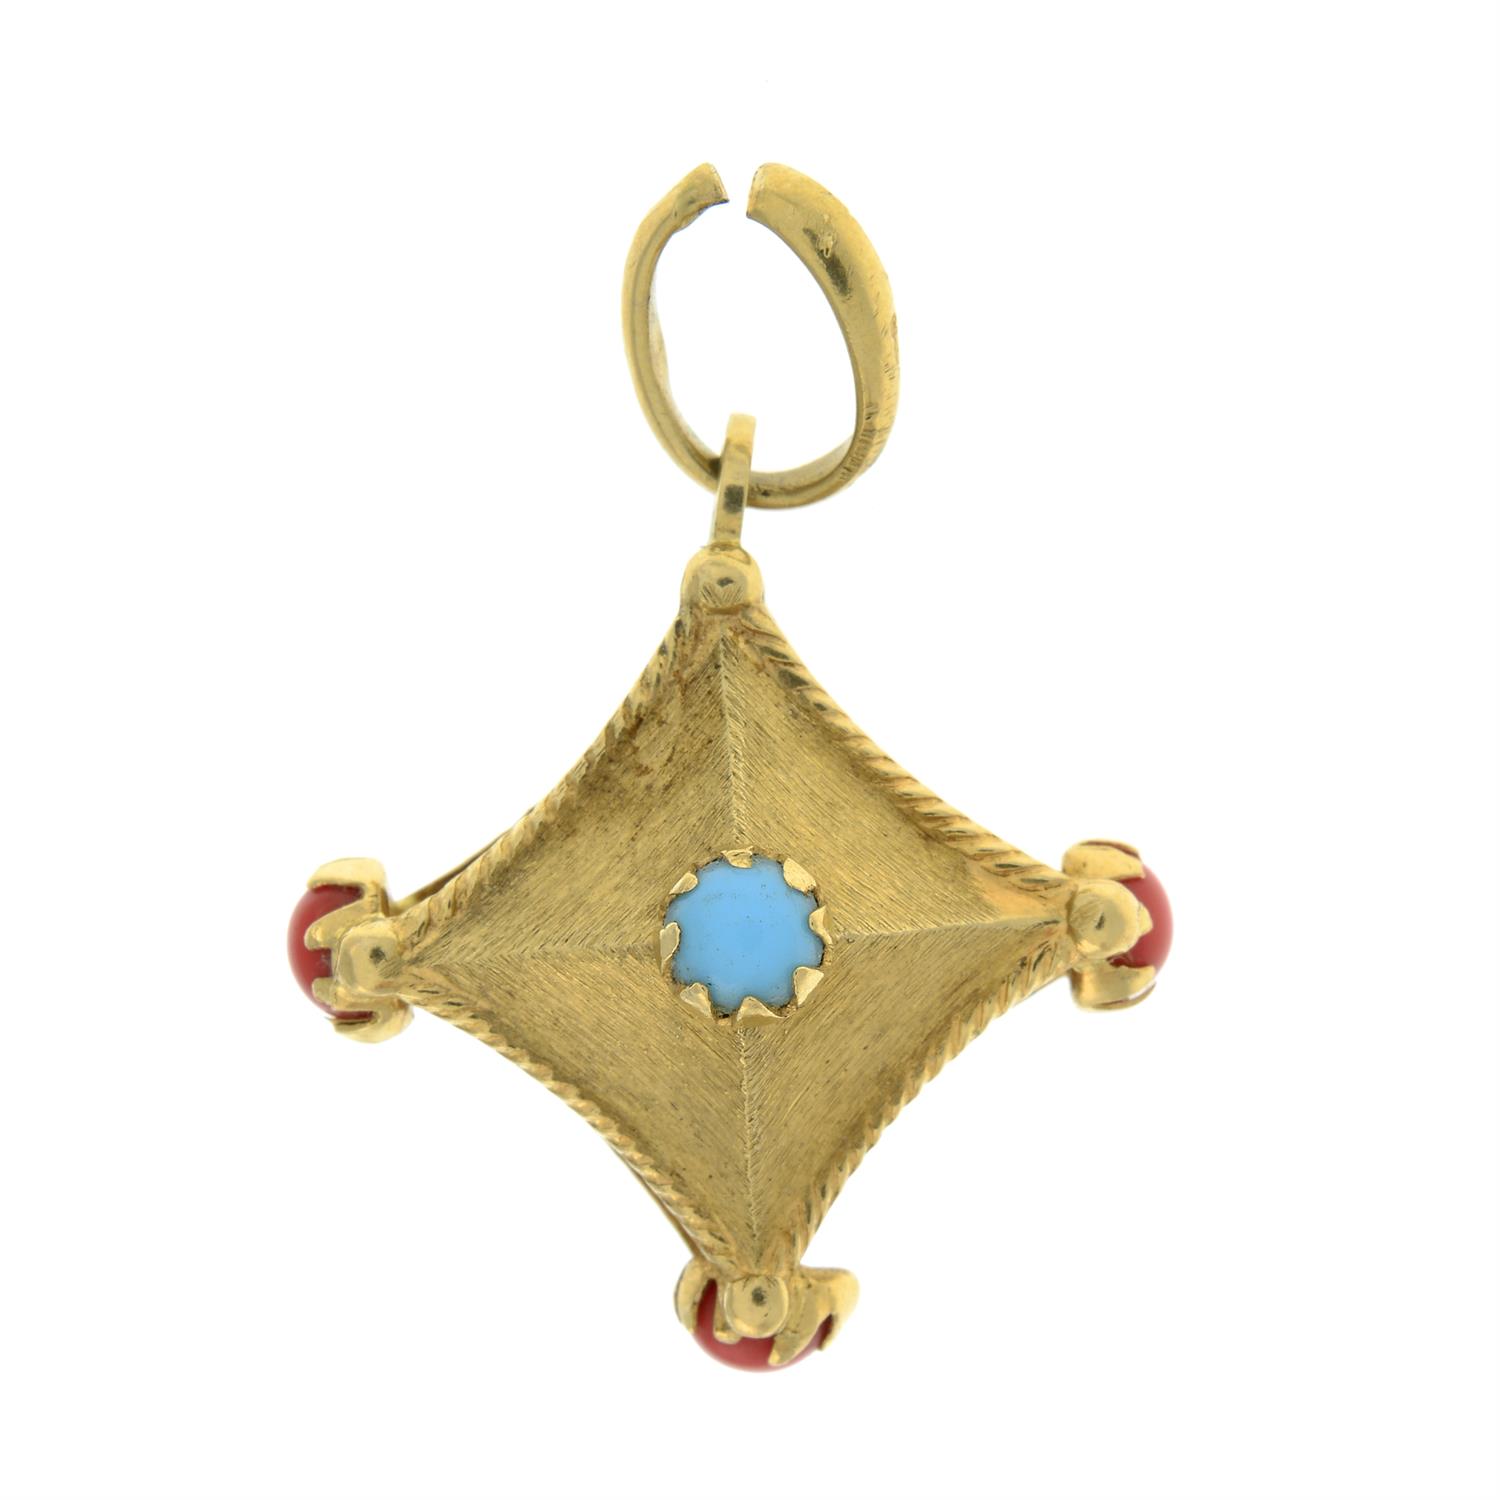 Vari-hue paste pendant - Image 2 of 3